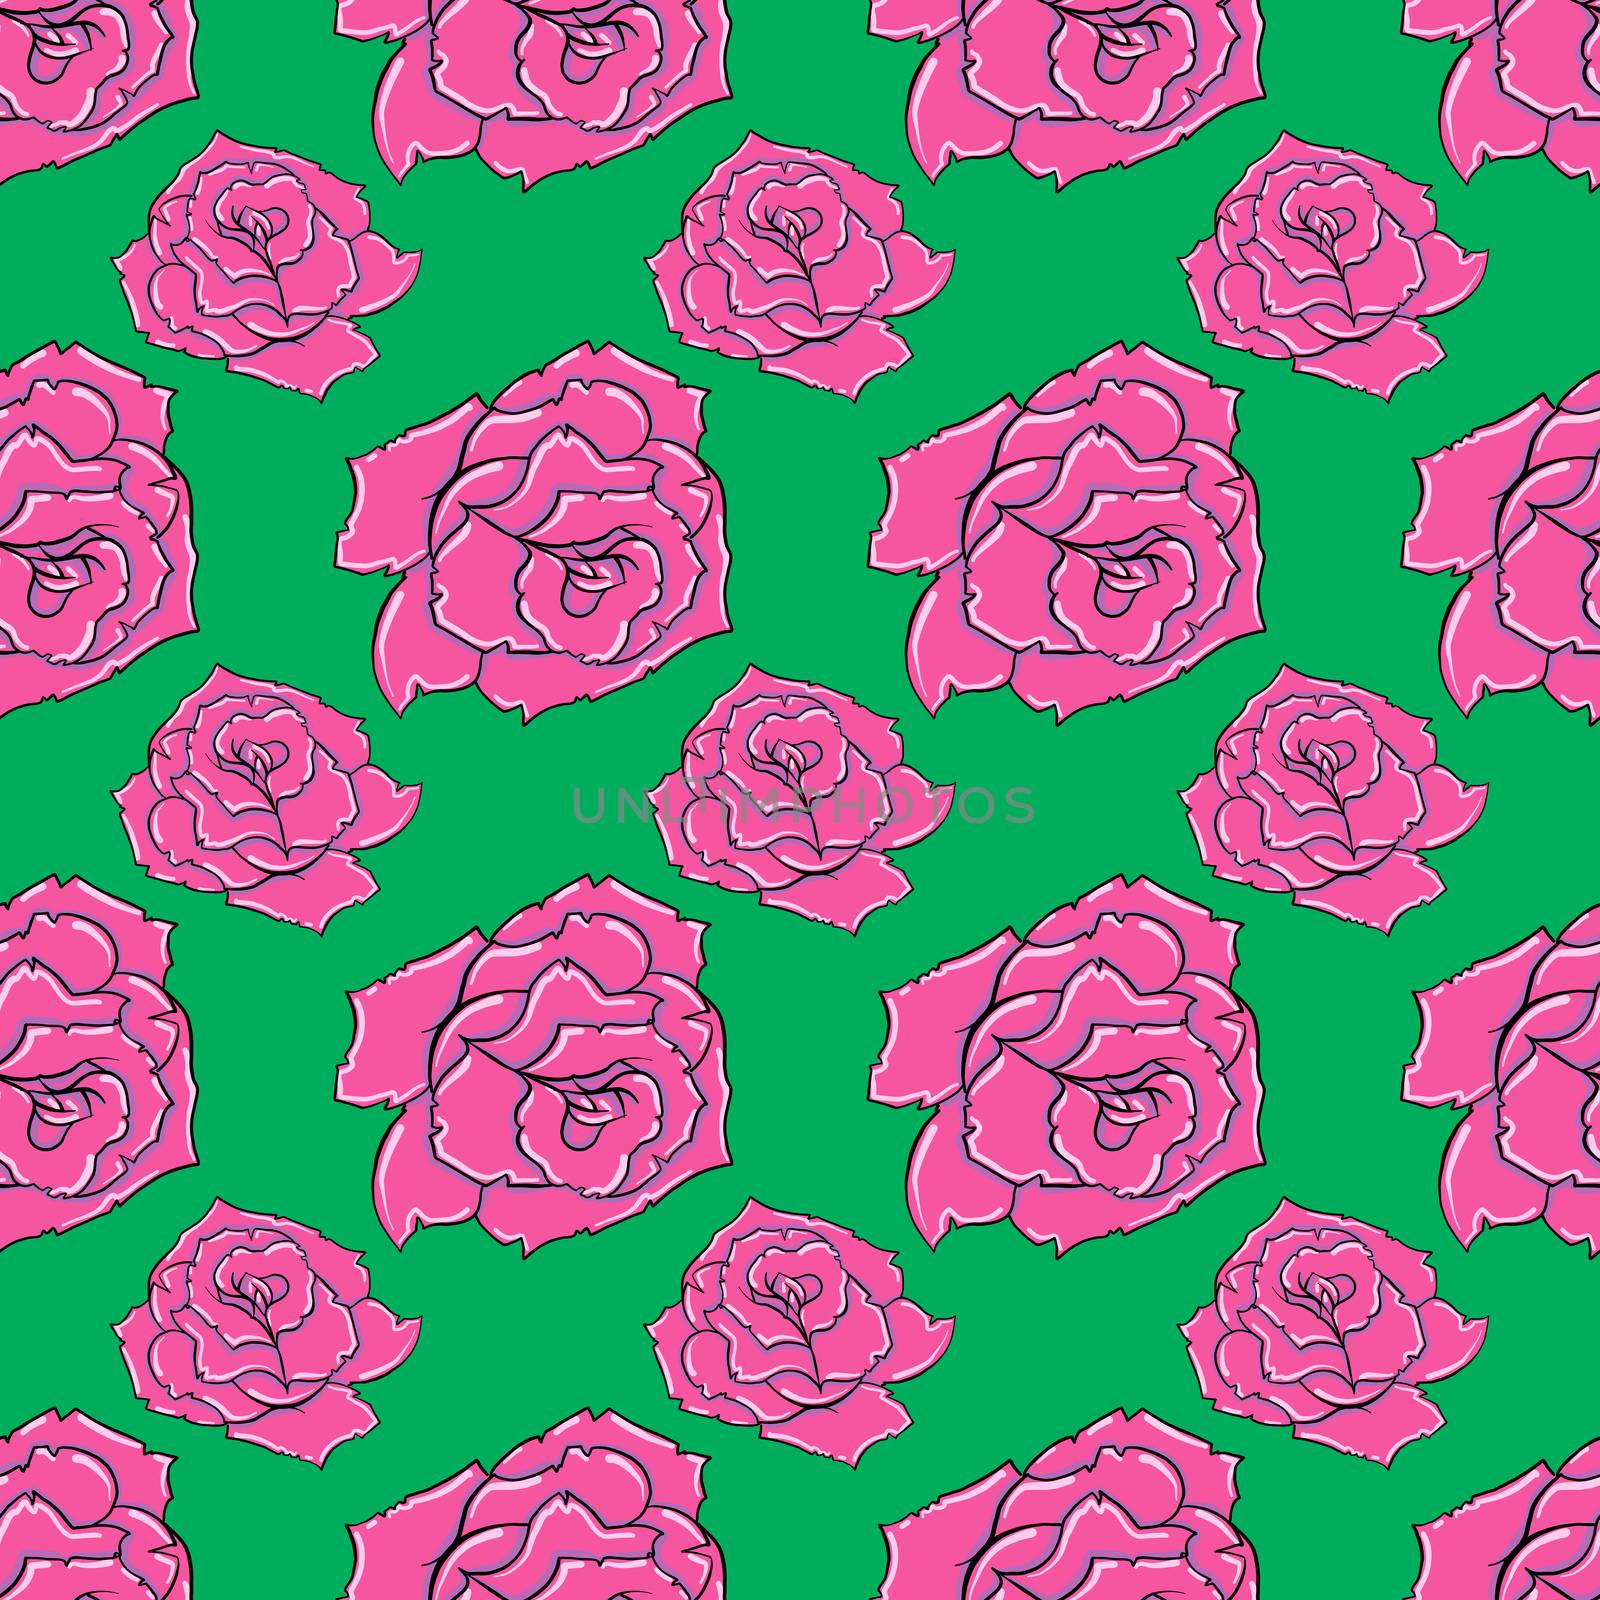 Pink roses pattern , illustration, vector on white background